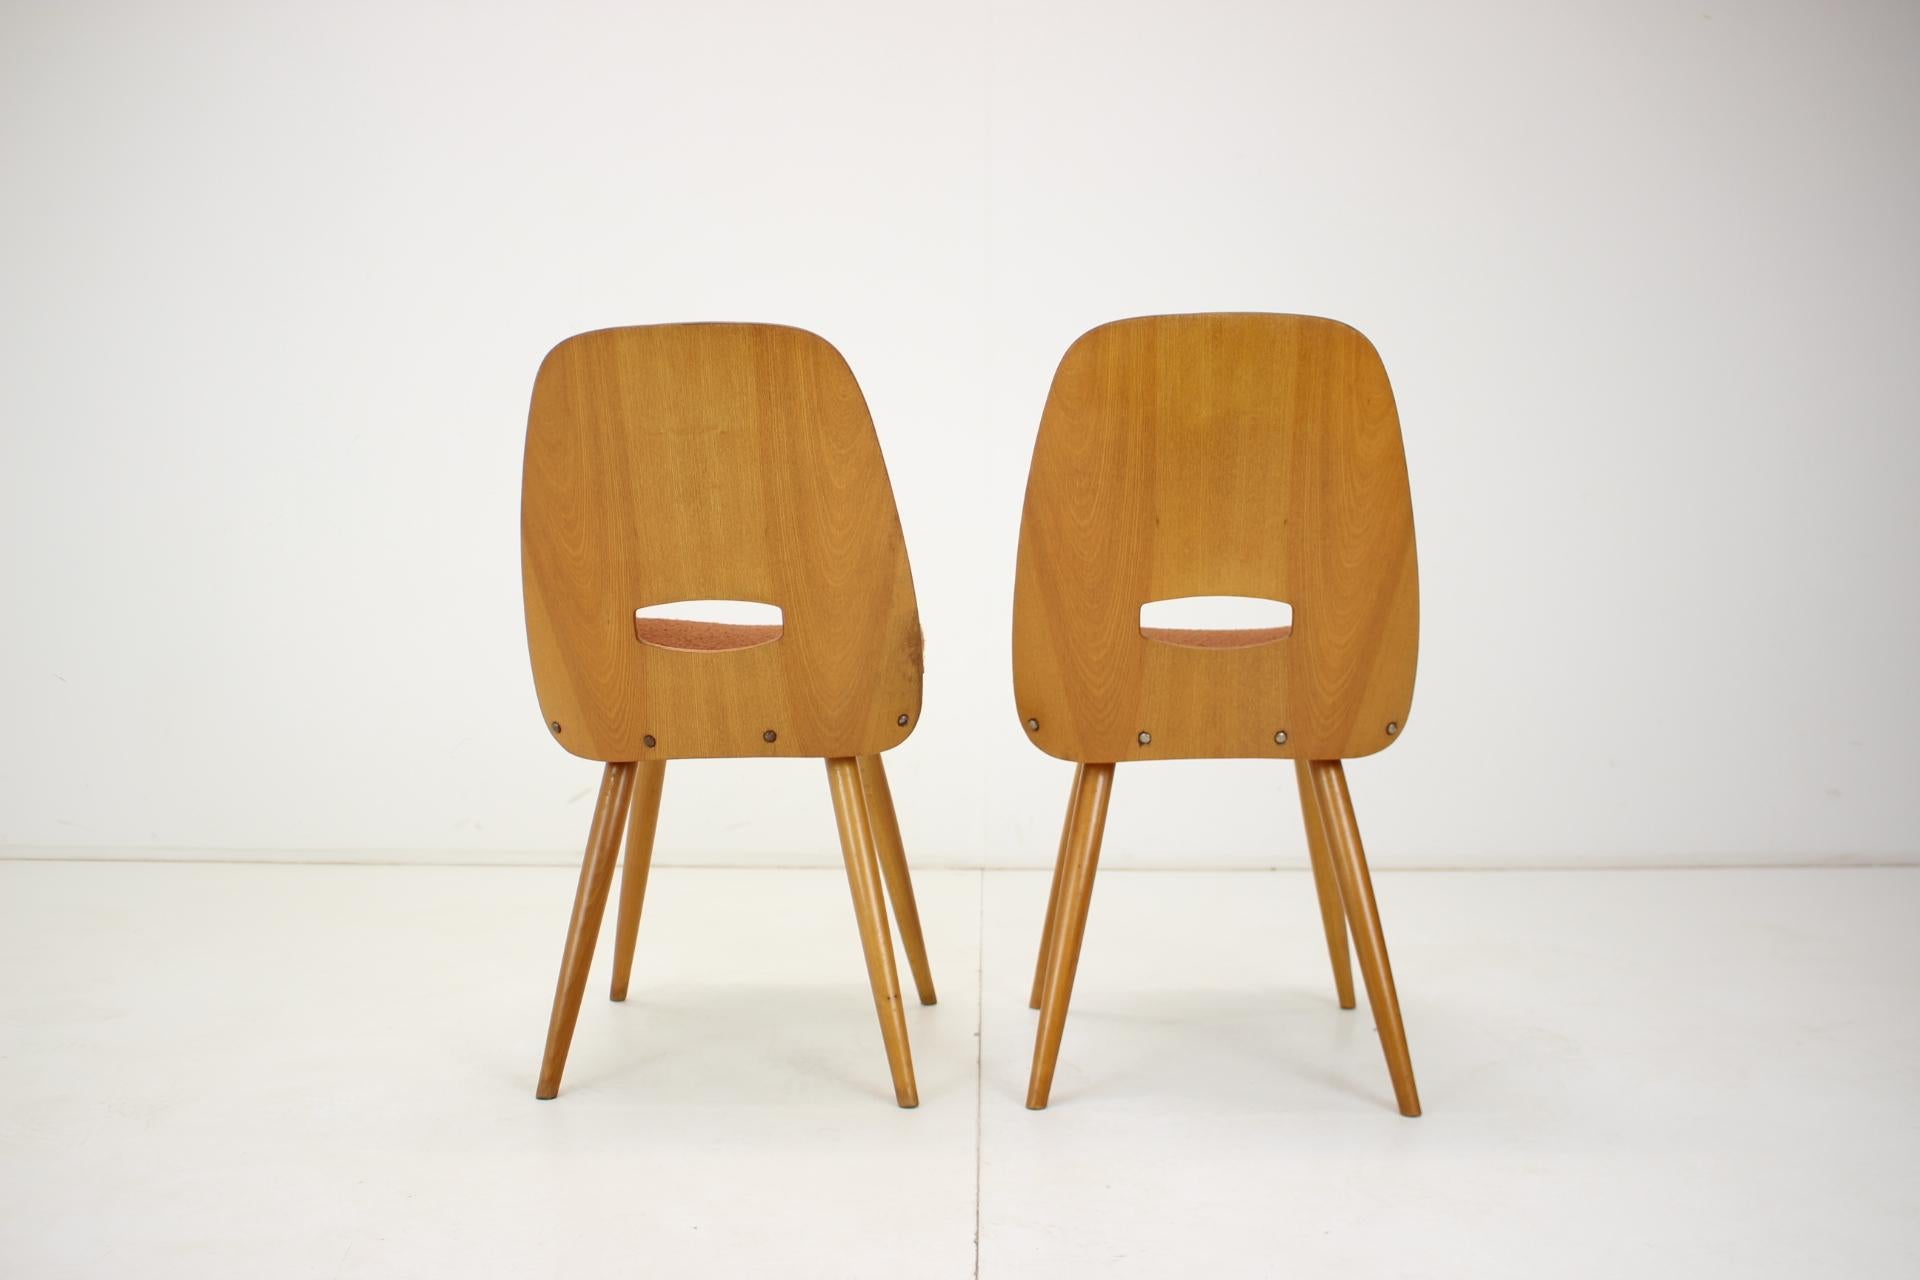 Czech Pair of Chair Designed by František Jirák for Tatra, 1960's